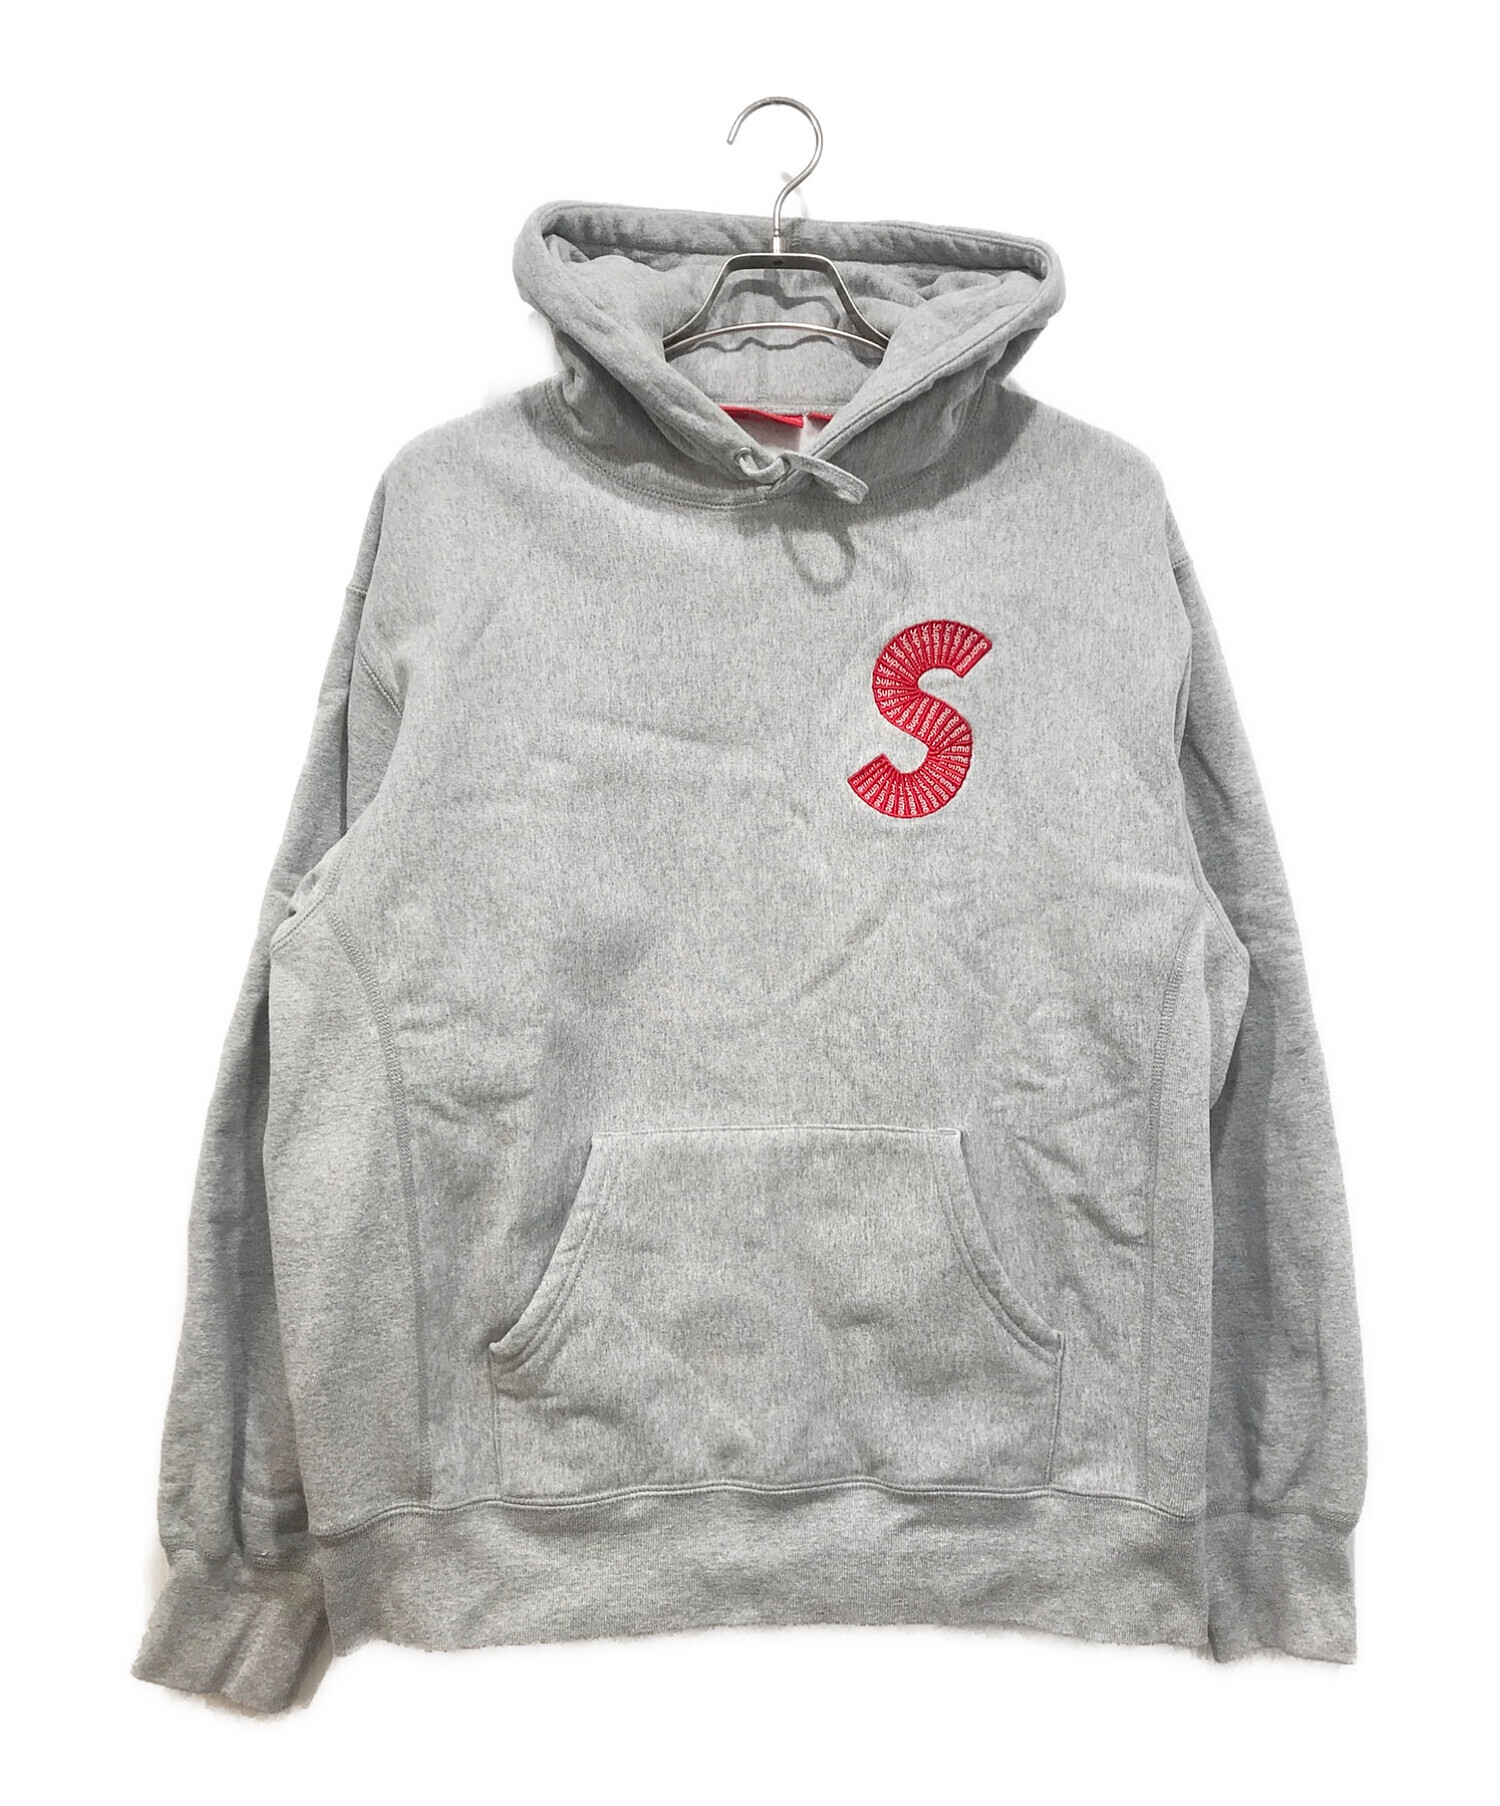 supreme s logo hooded sweatshirt M サイズ